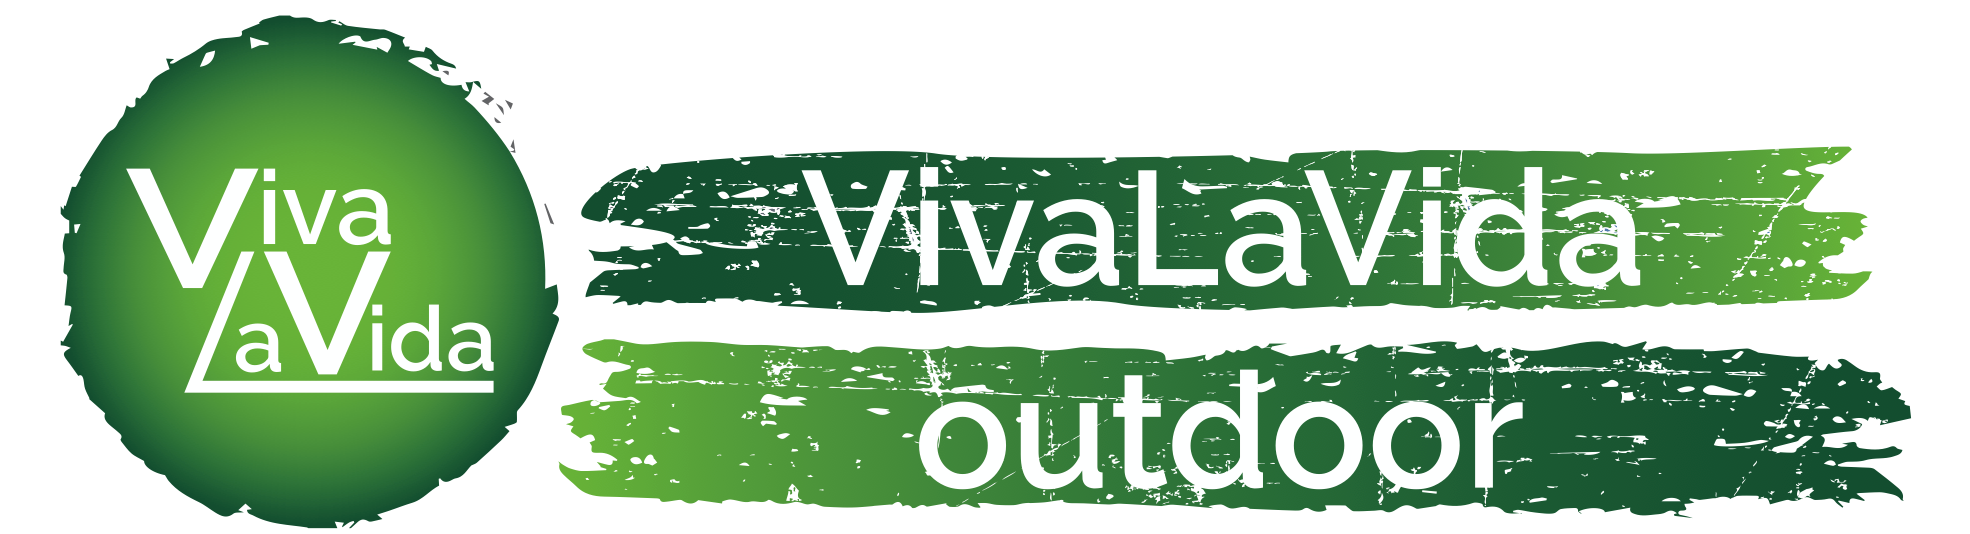 Vivalavida-Outdoor Logo